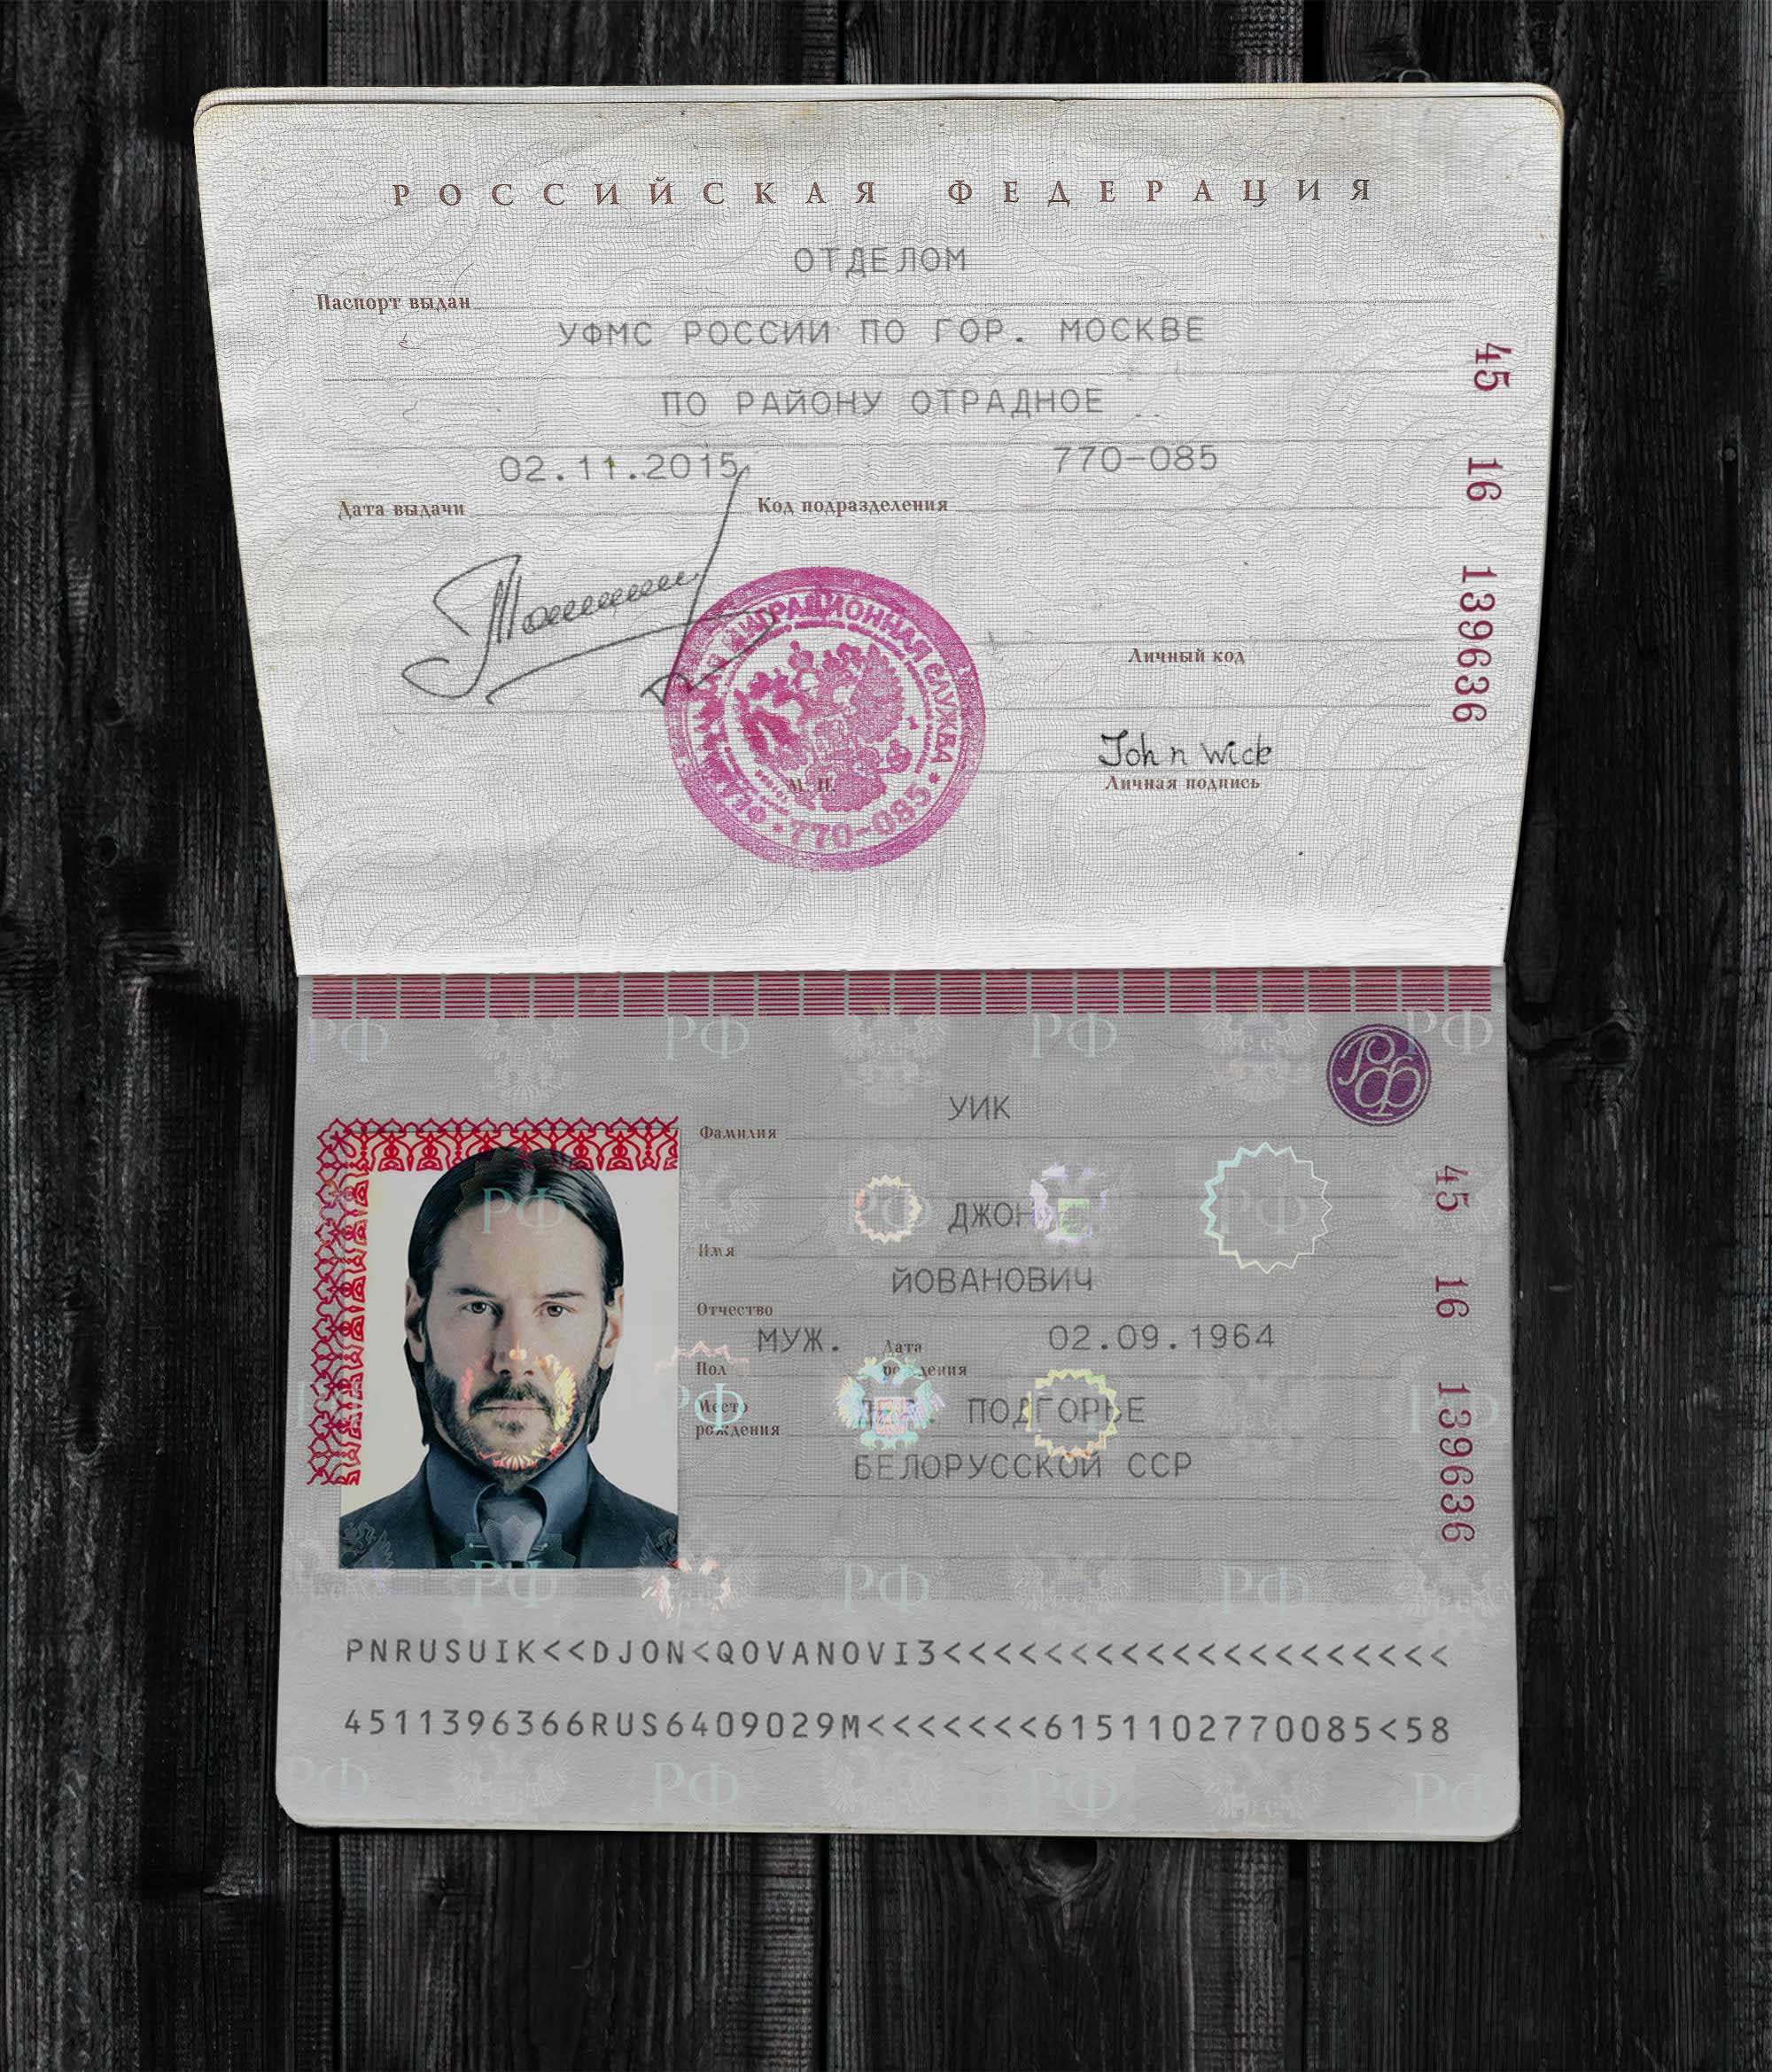 Russia Passport 2010+ PSD2